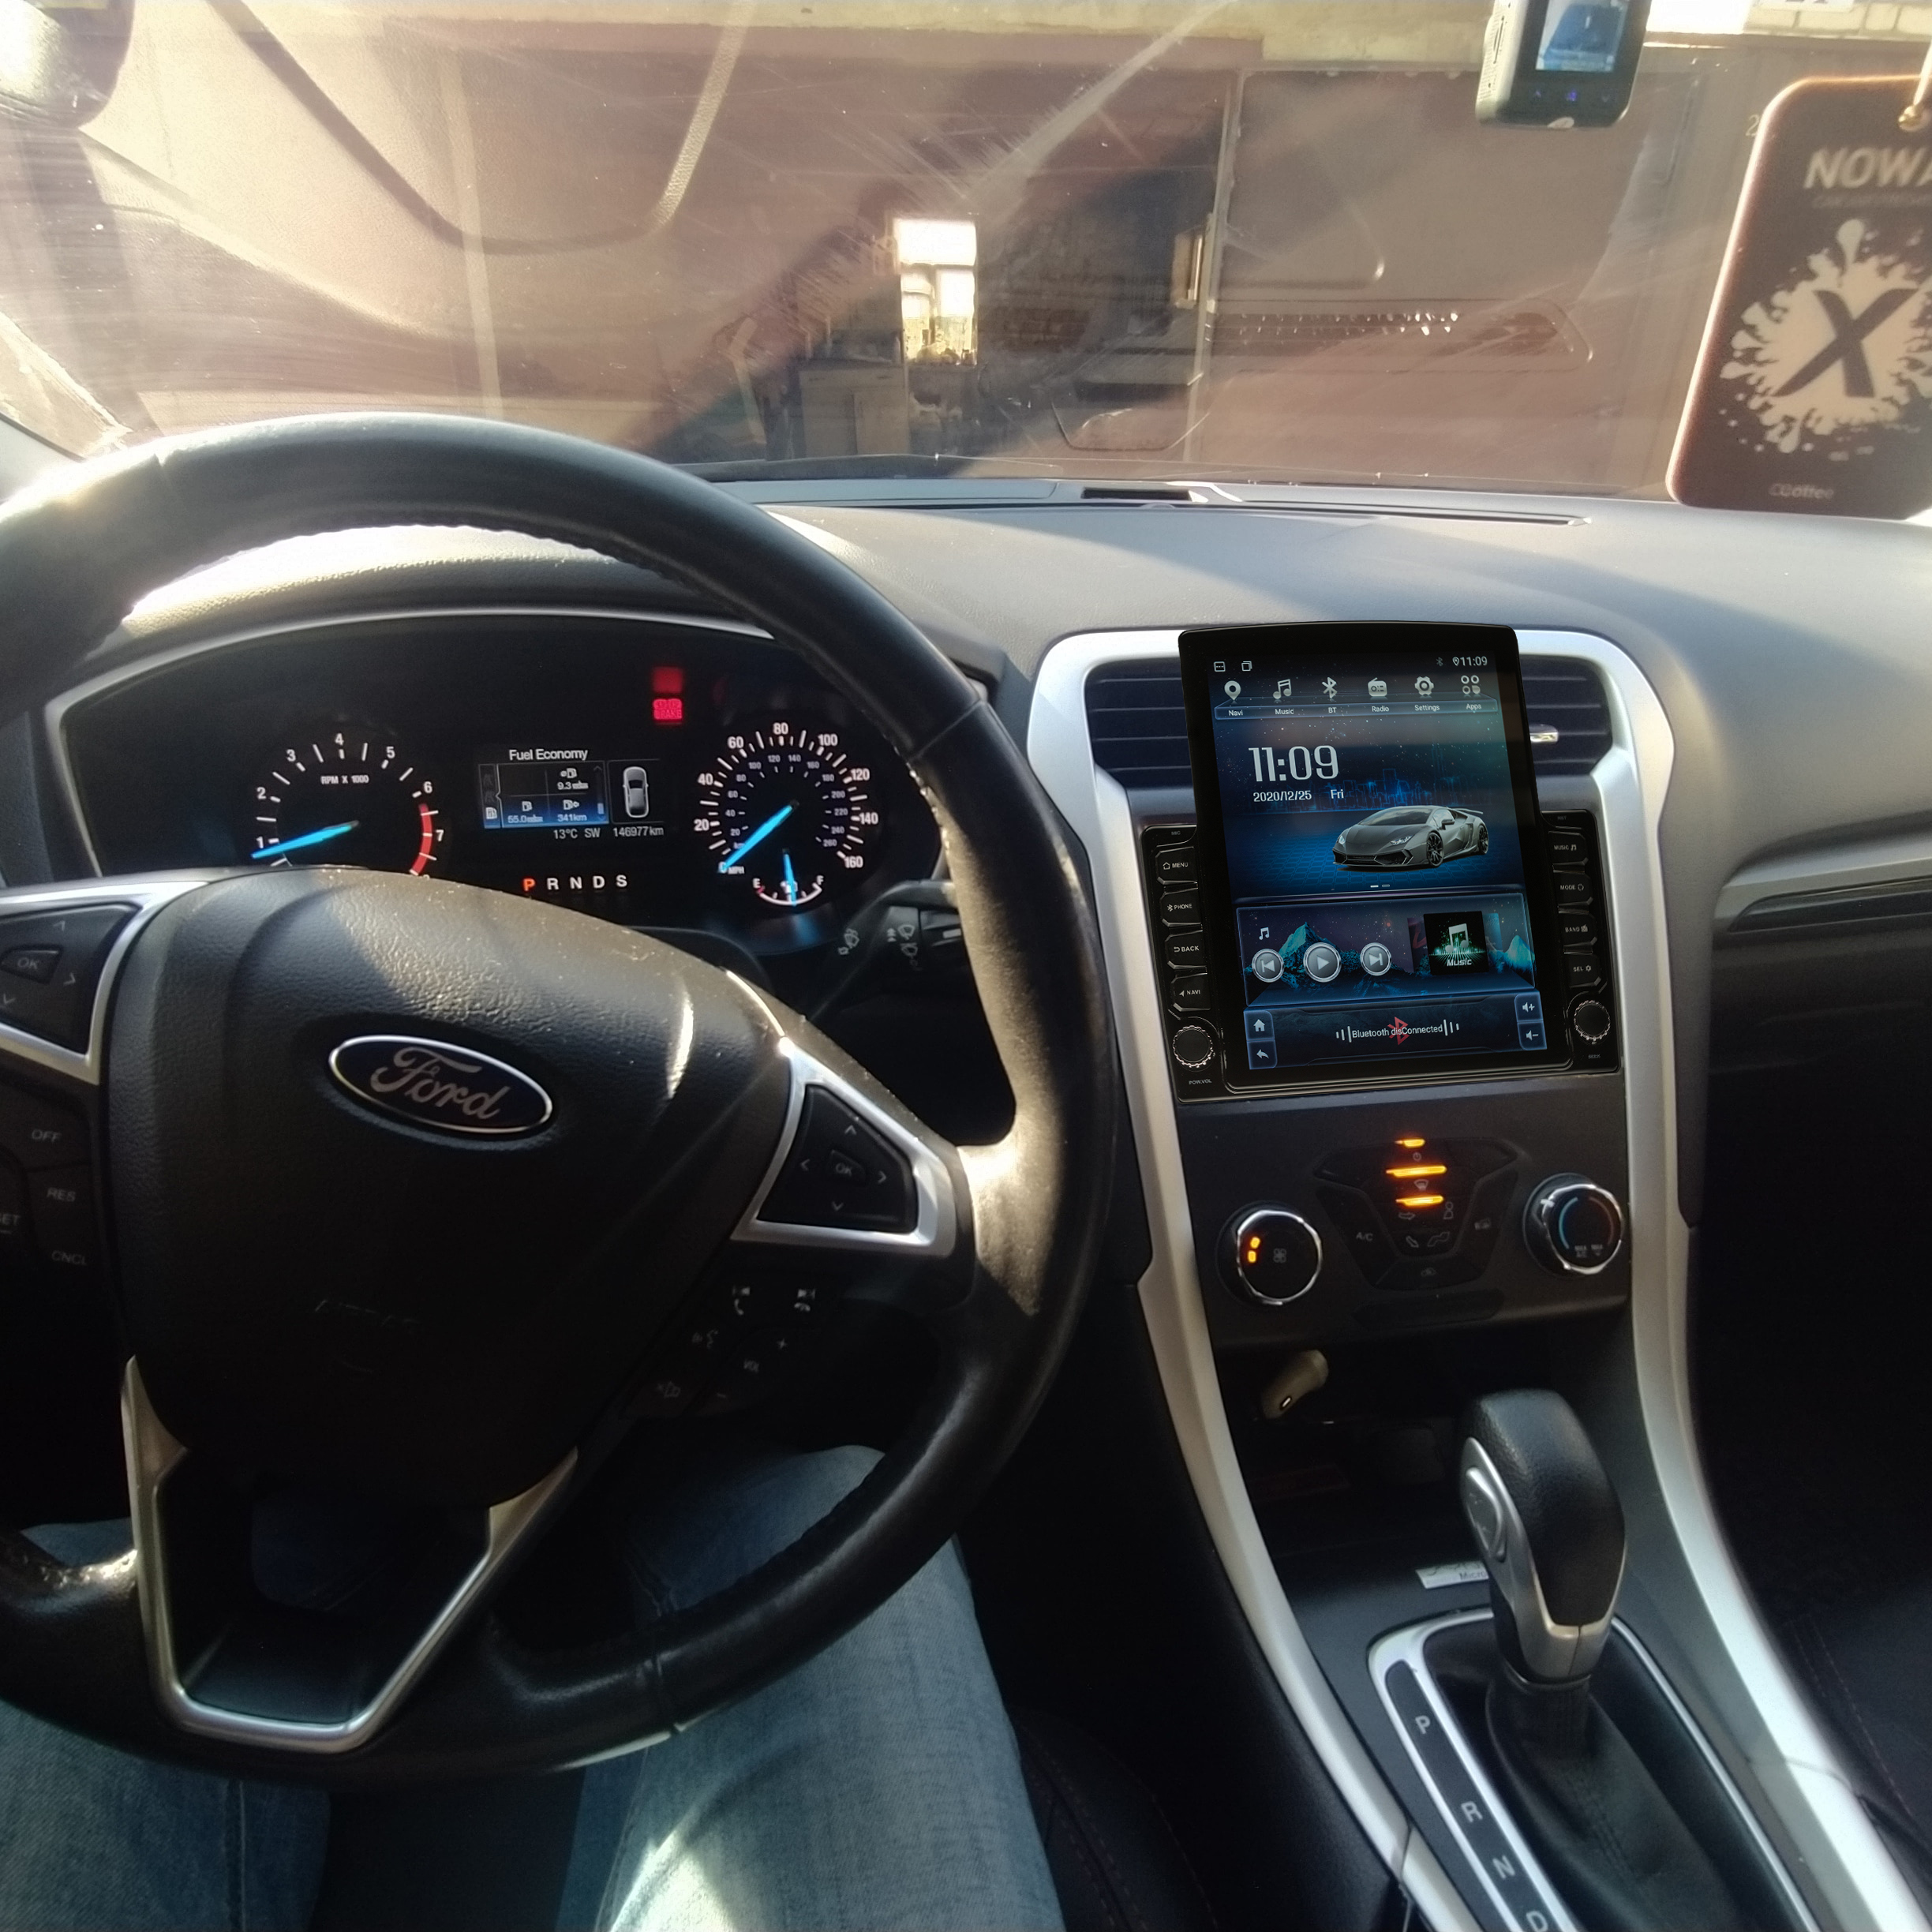 Navigatie AUTONAV ECO Android GPS Dedicata Ford Mondeo 2013-2019, Model XPERT Memorie 16GB Stocare, 1GB DDR3 RAM, Display Vertical Stil Tesla 10" Full-Touch, WiFi, 2 x USB, Bluetooth, Quad-Core 4 * 1.3GHz, 4 * 50W Audio